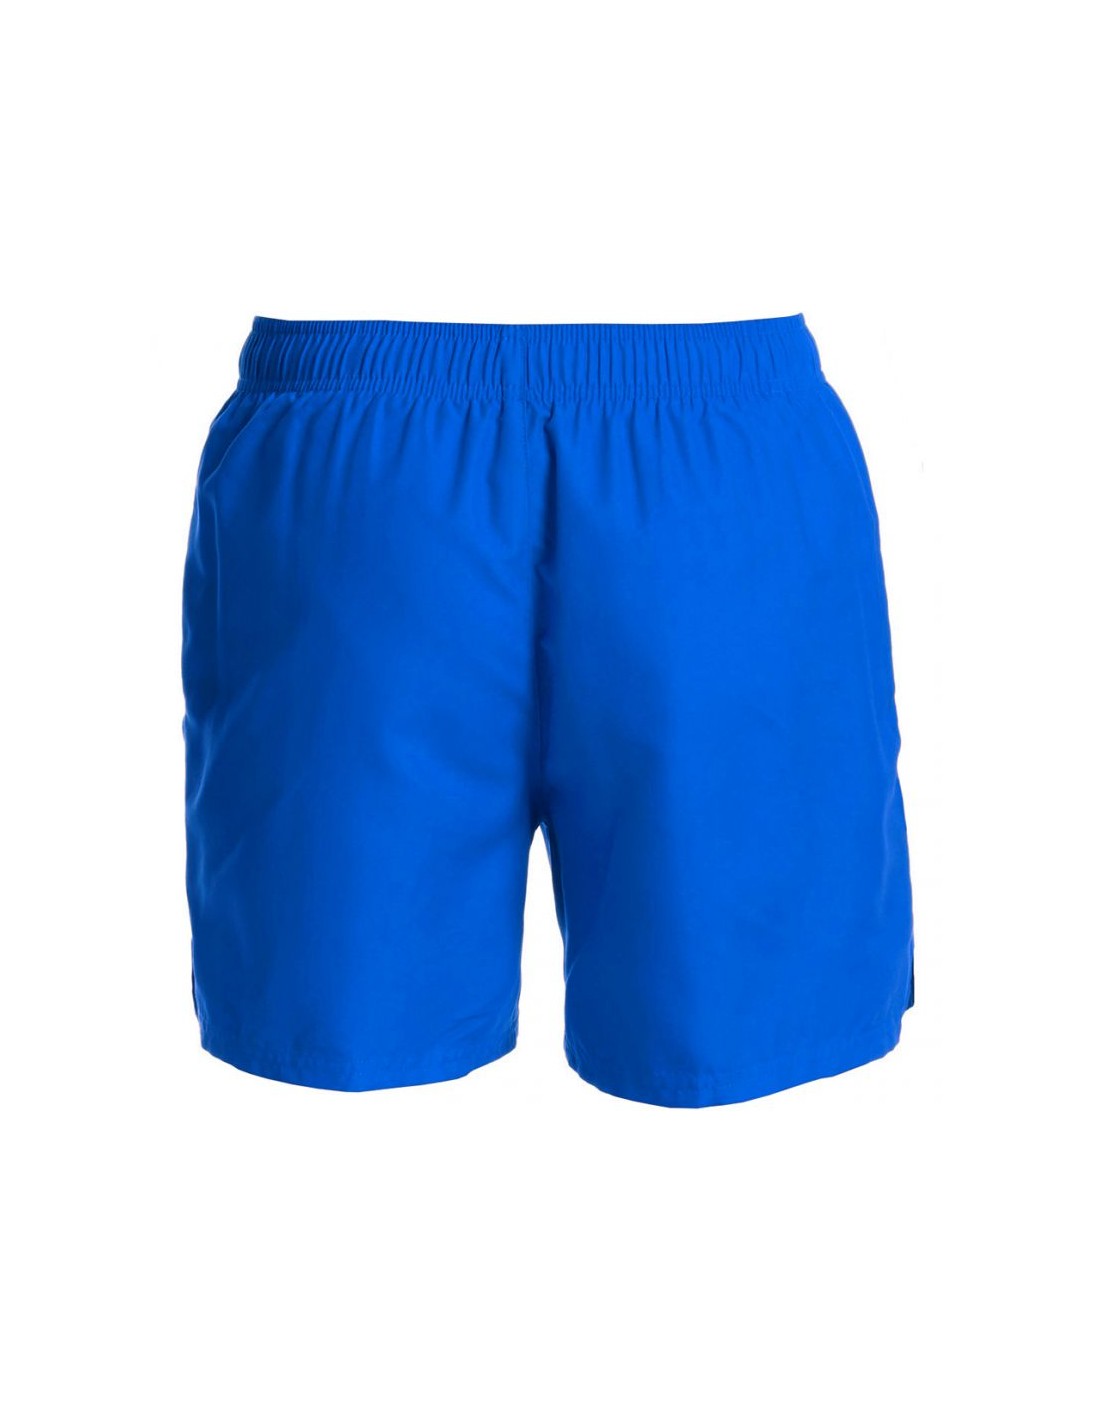 Nike Essential M NESSA560 494 swimming shorts